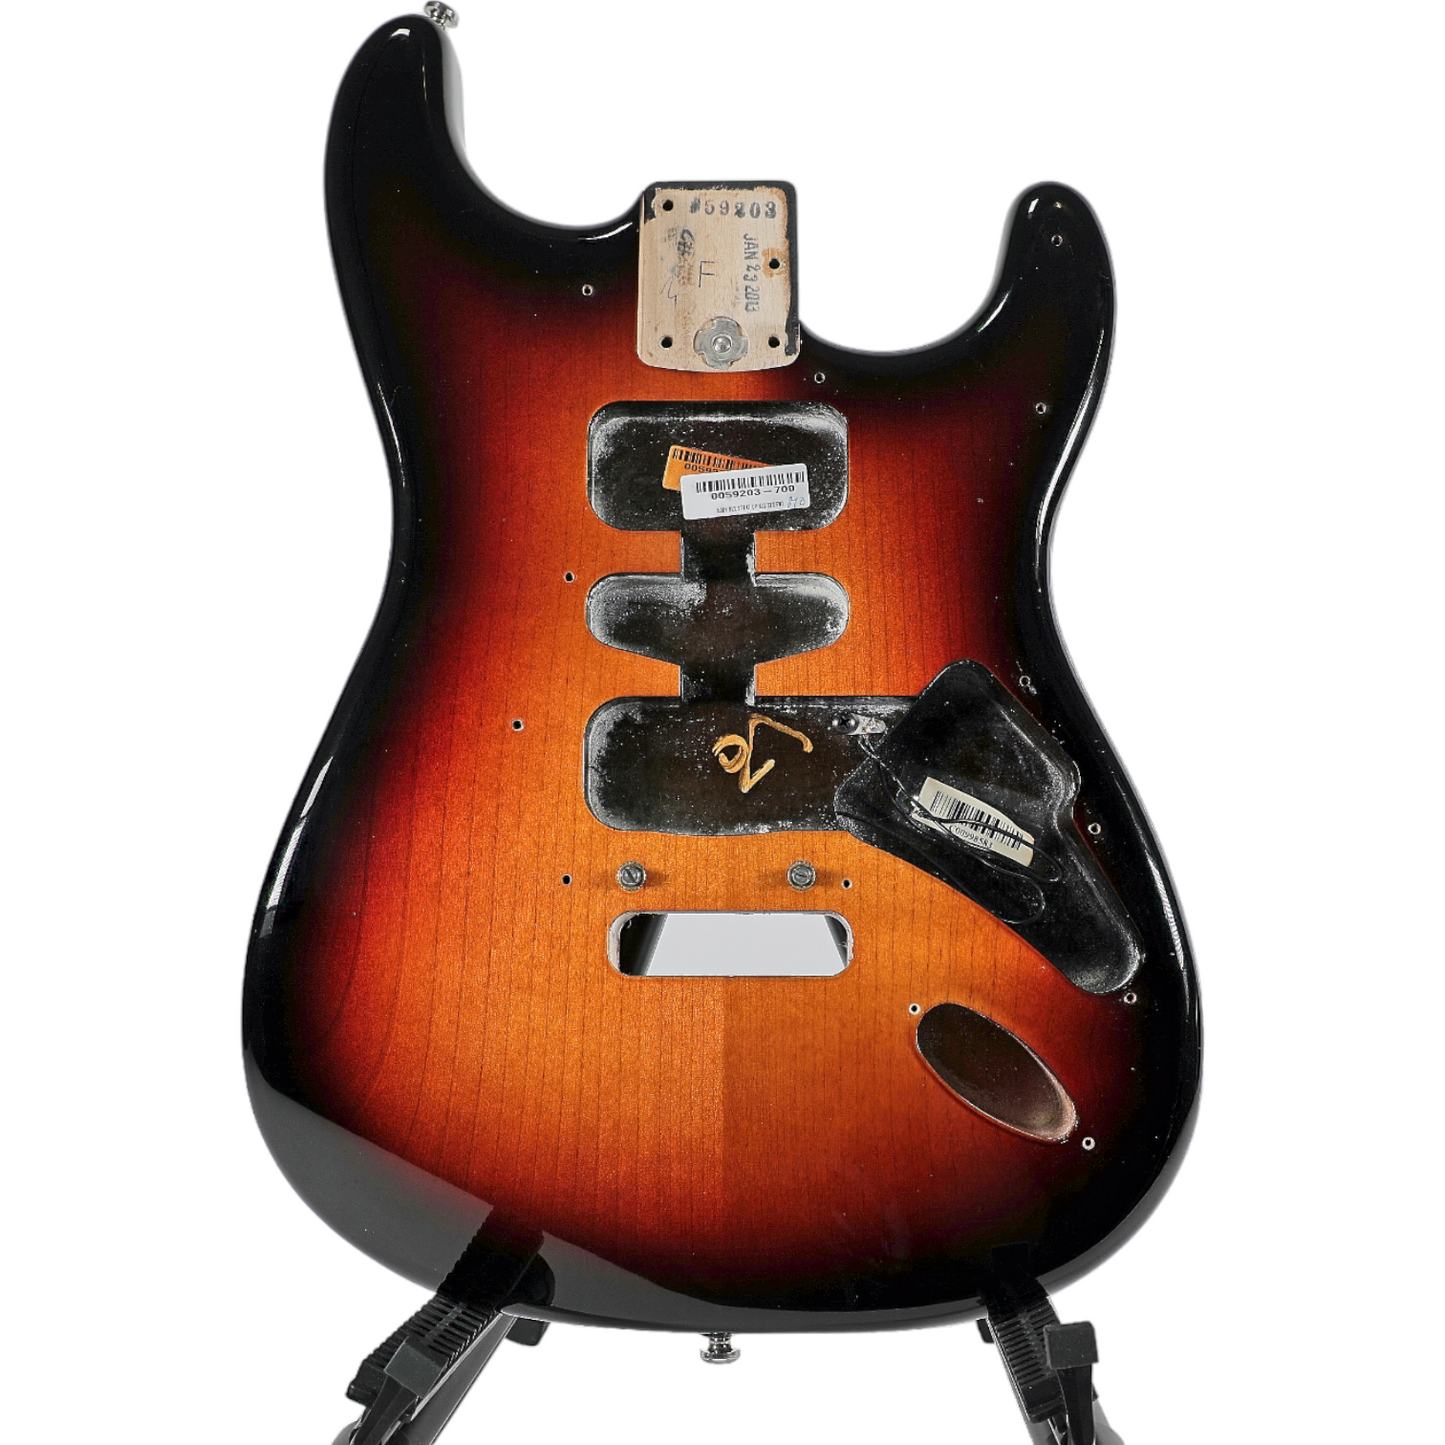 2013 Fender American Deluxe Stratocaster Body Three Tone Sunburst HSH